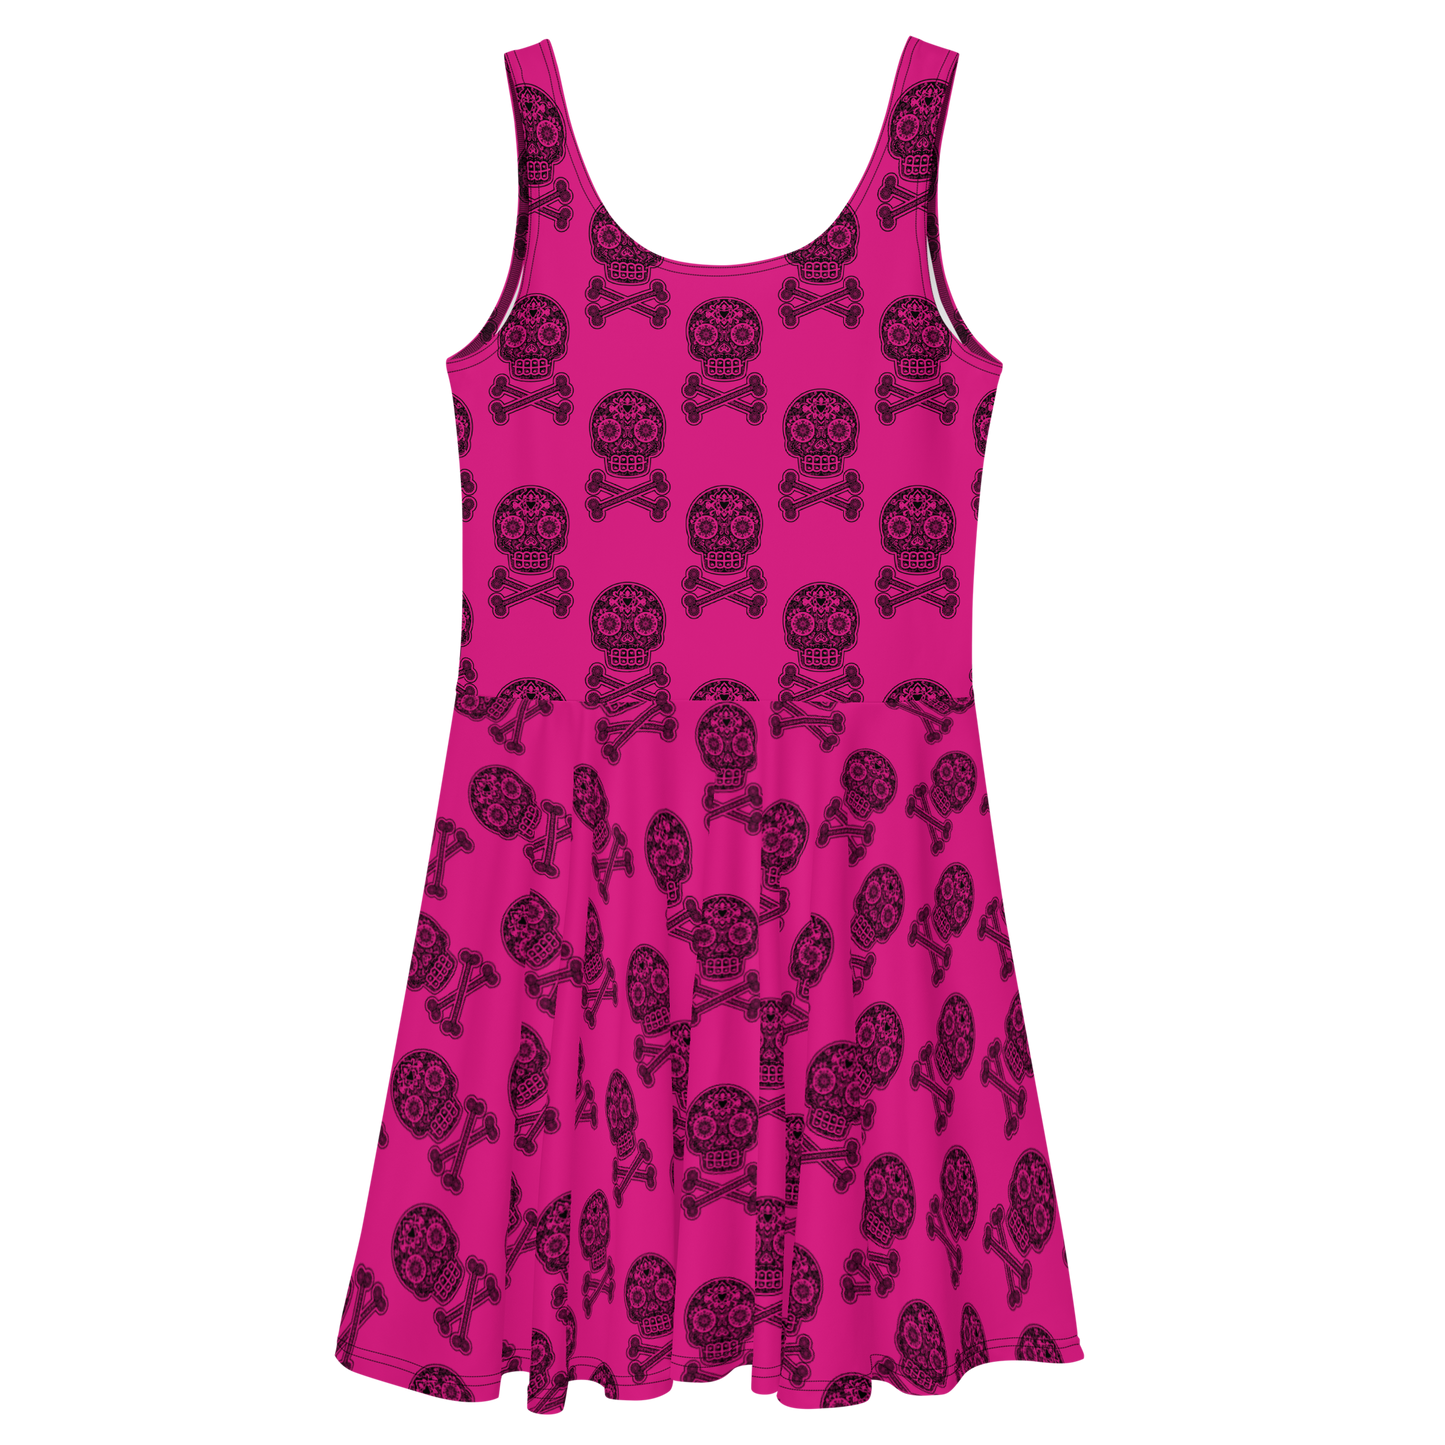 Skulls in Black on Pink Skater Dress